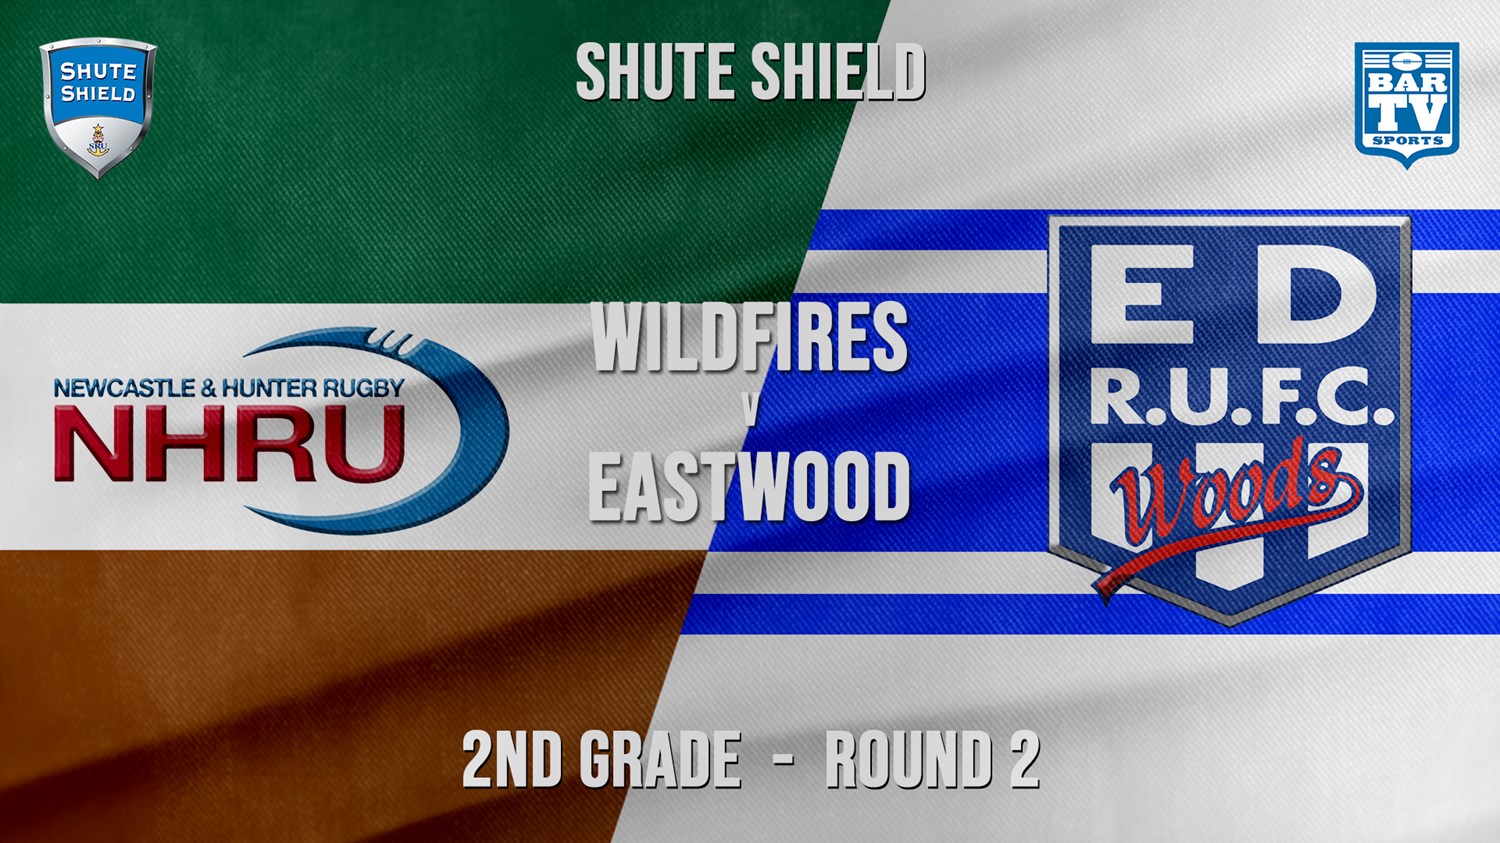 Shute Shield 2nd Grade - Round 2 - NHRU Wildfires v Eastwood Minigame Slate Image